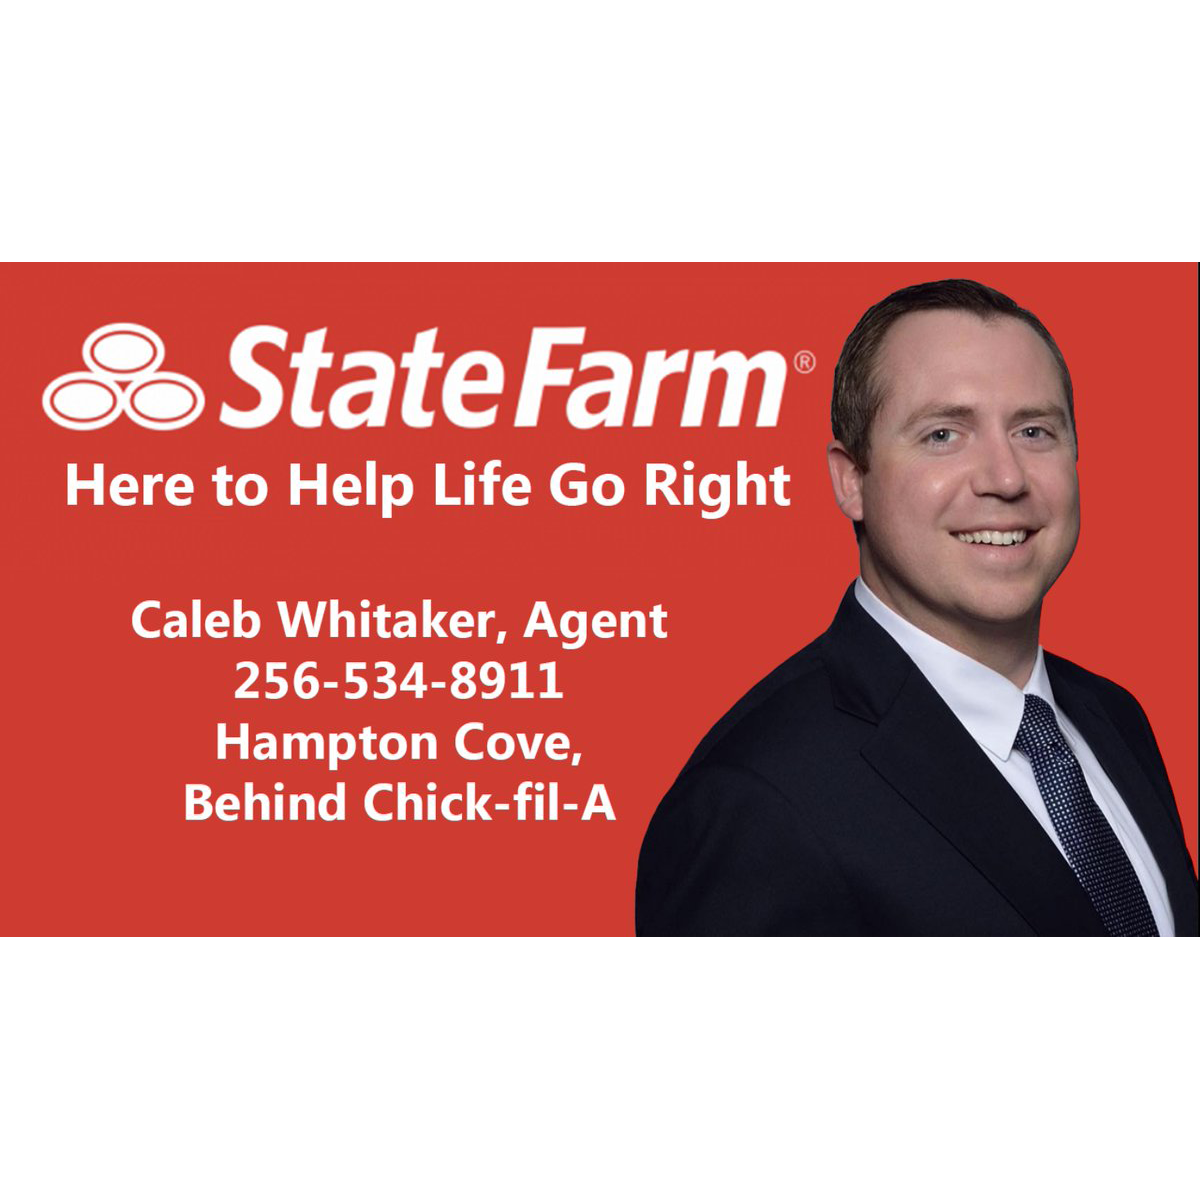 State Farm Caleb Whitaker